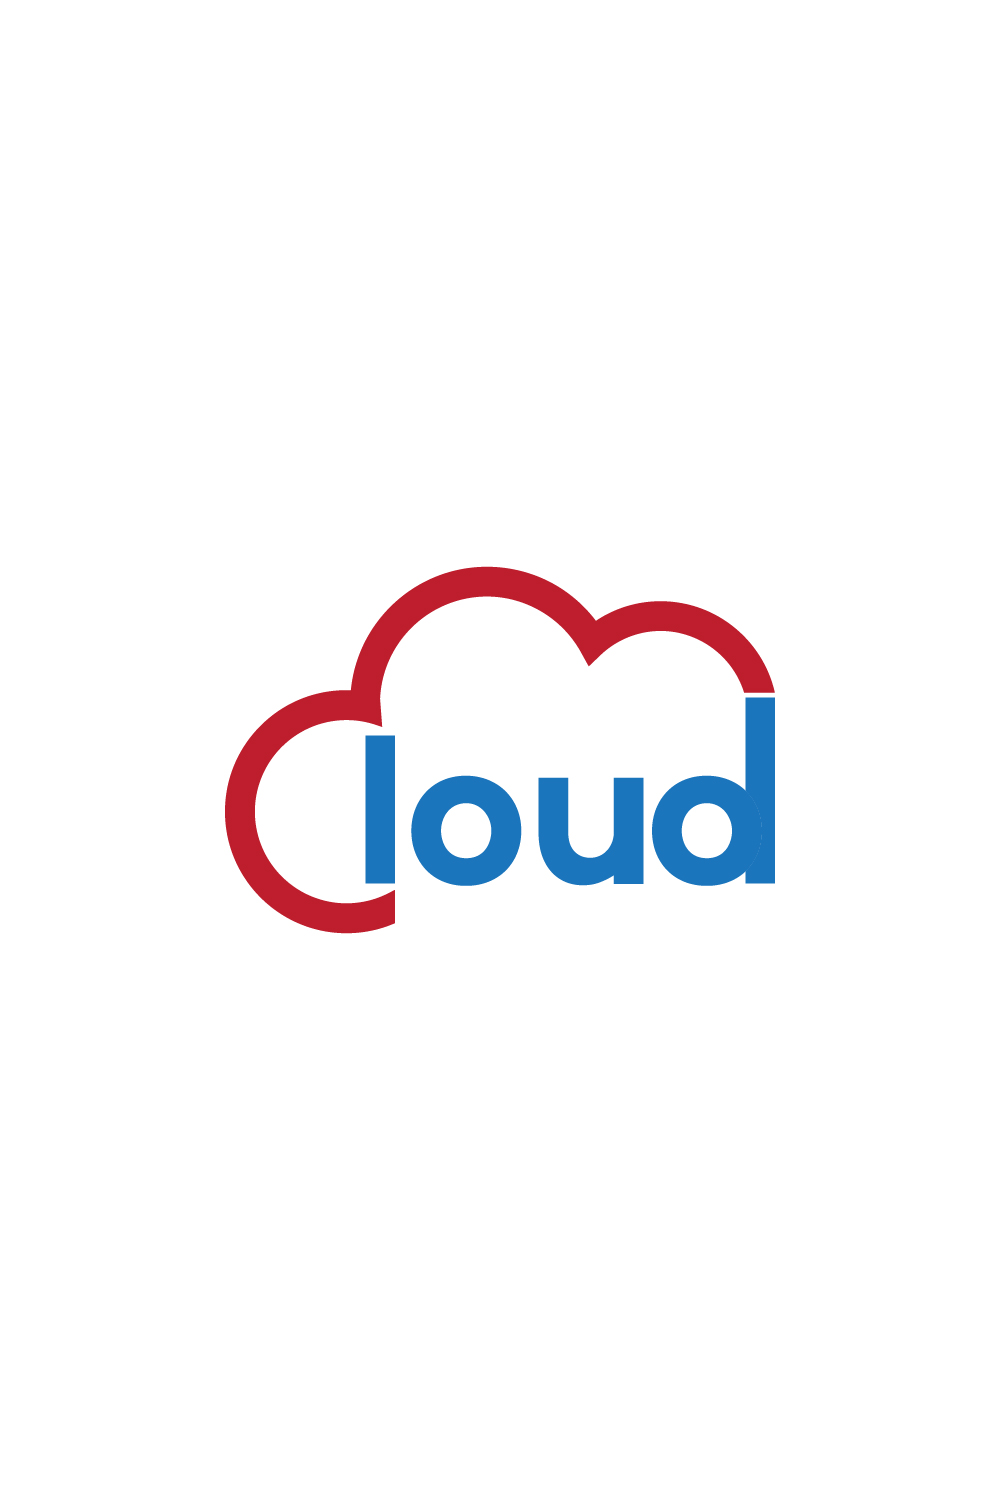 Cool Cloud Logo Design pinterest image.